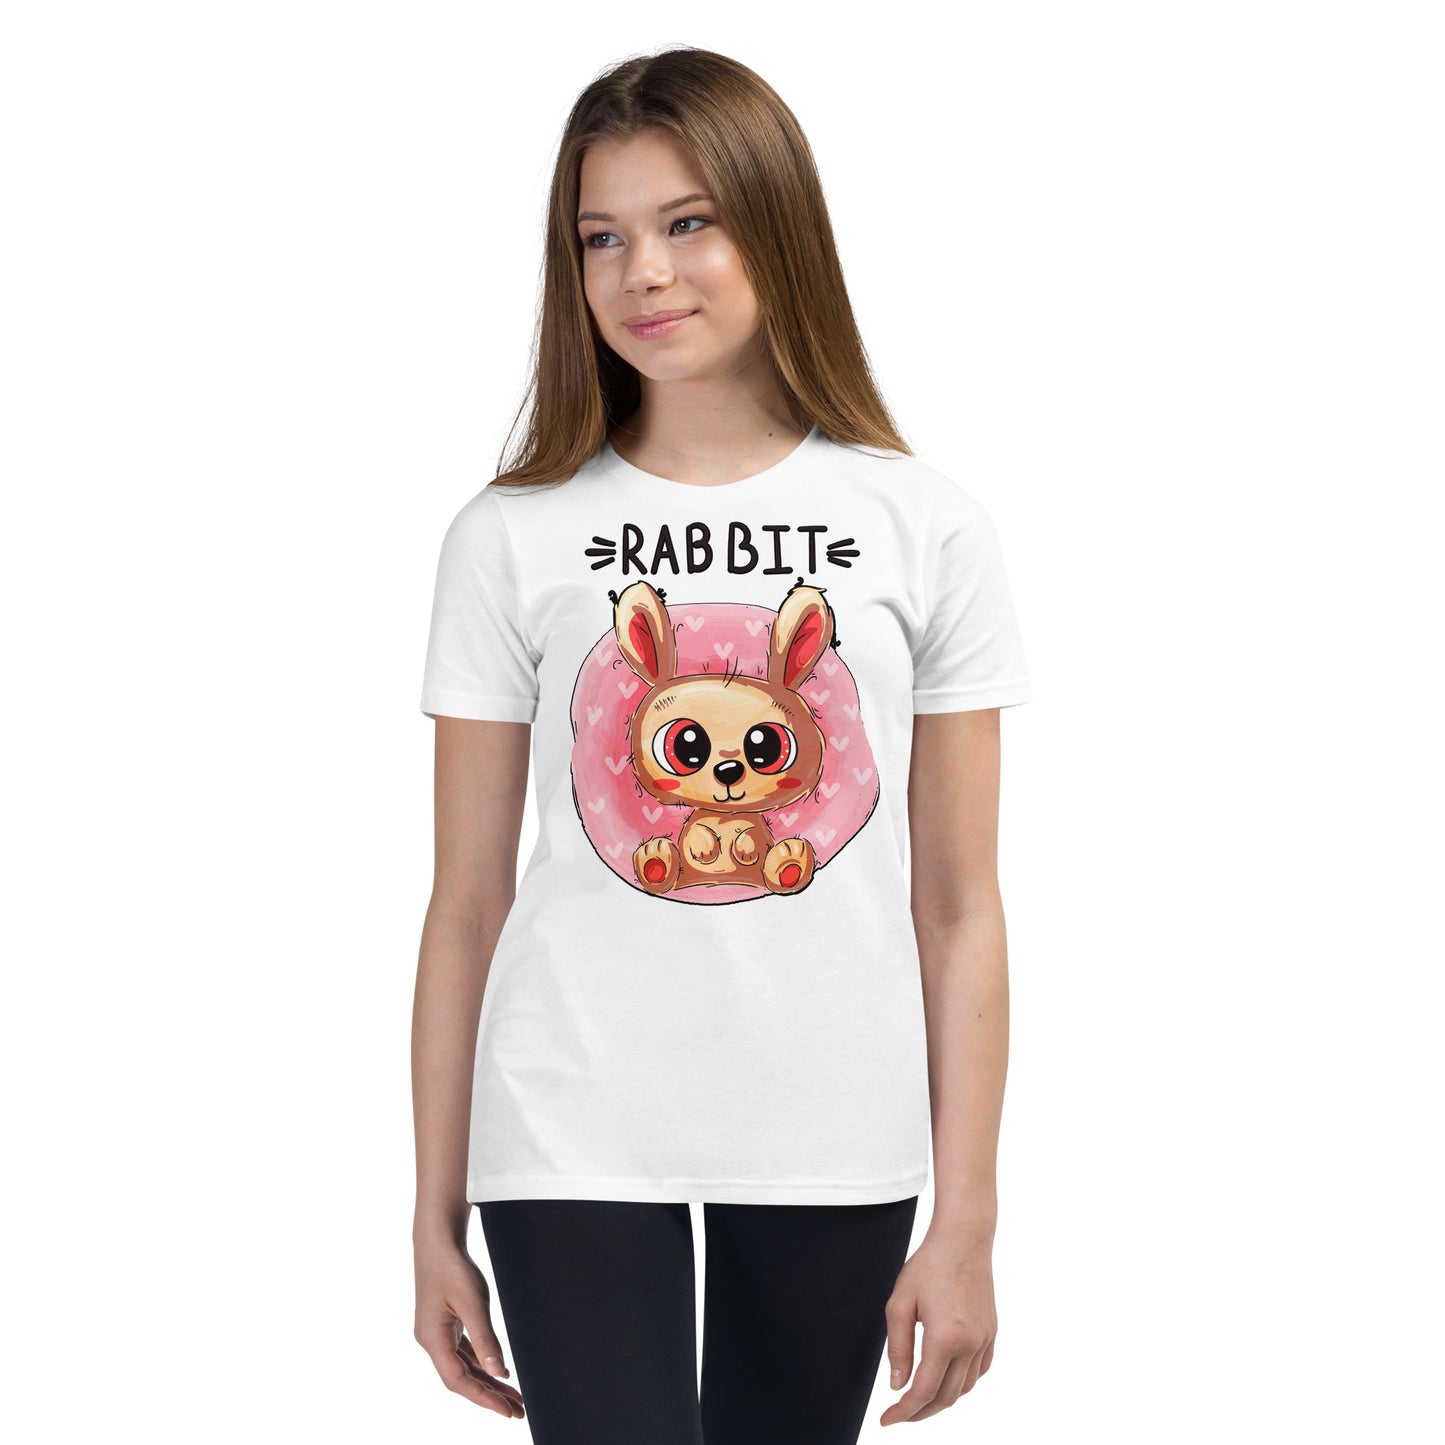 Cute Rabbit T-shirt, No. 0387